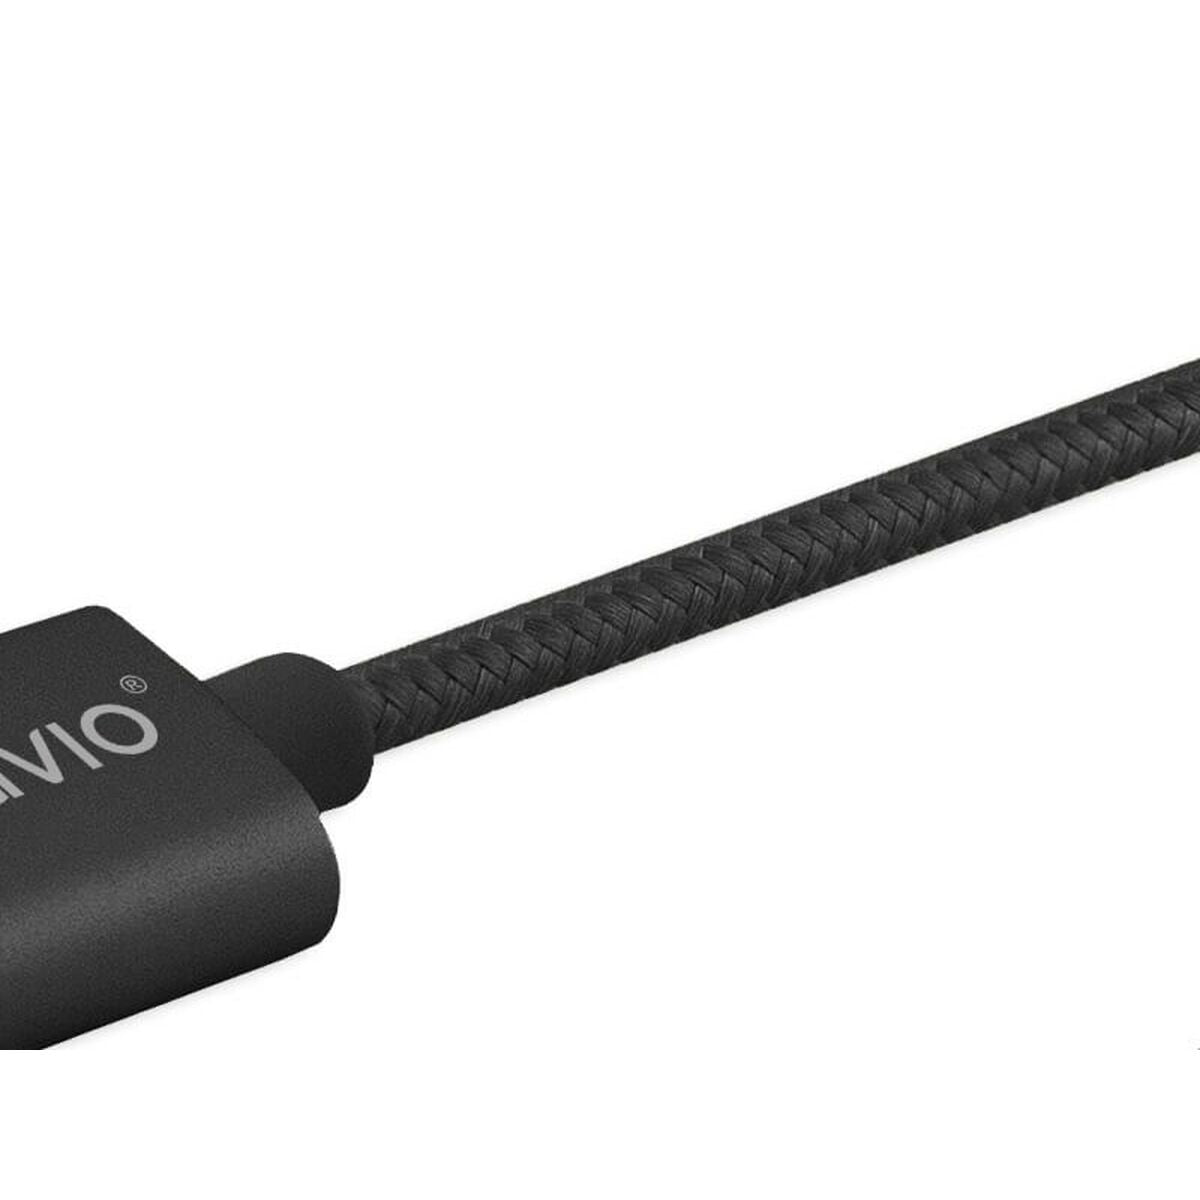 Cabo USB para Micro USB e USB C Savio CL-128 Preto 1 m